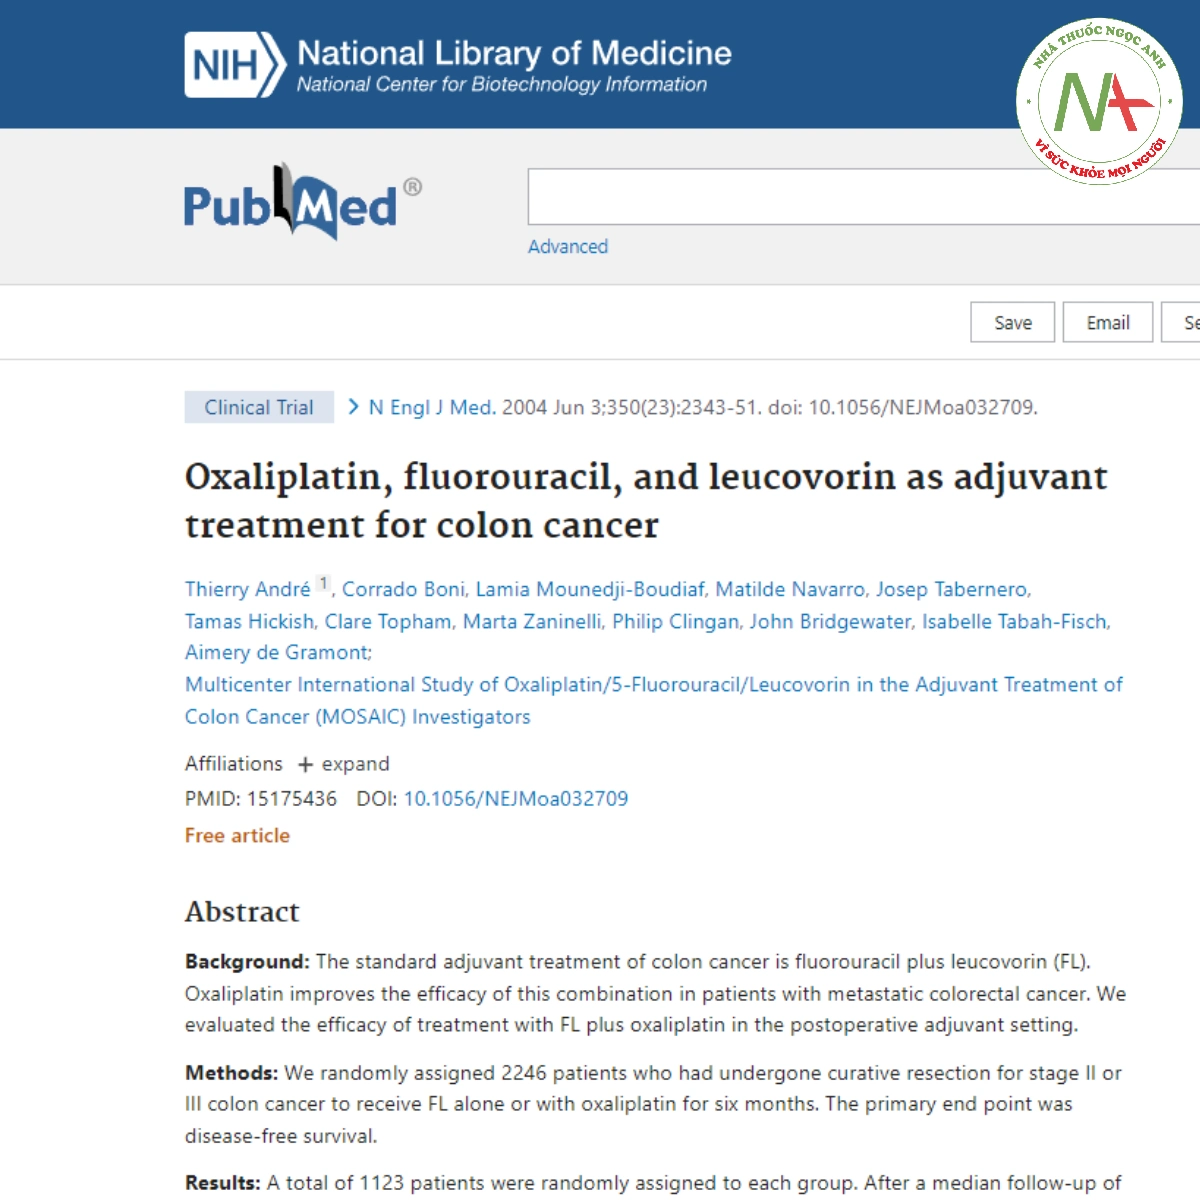 Oxaliplatin, fluorouracil, and leucovorin as adjuvant treatment for colon cancer